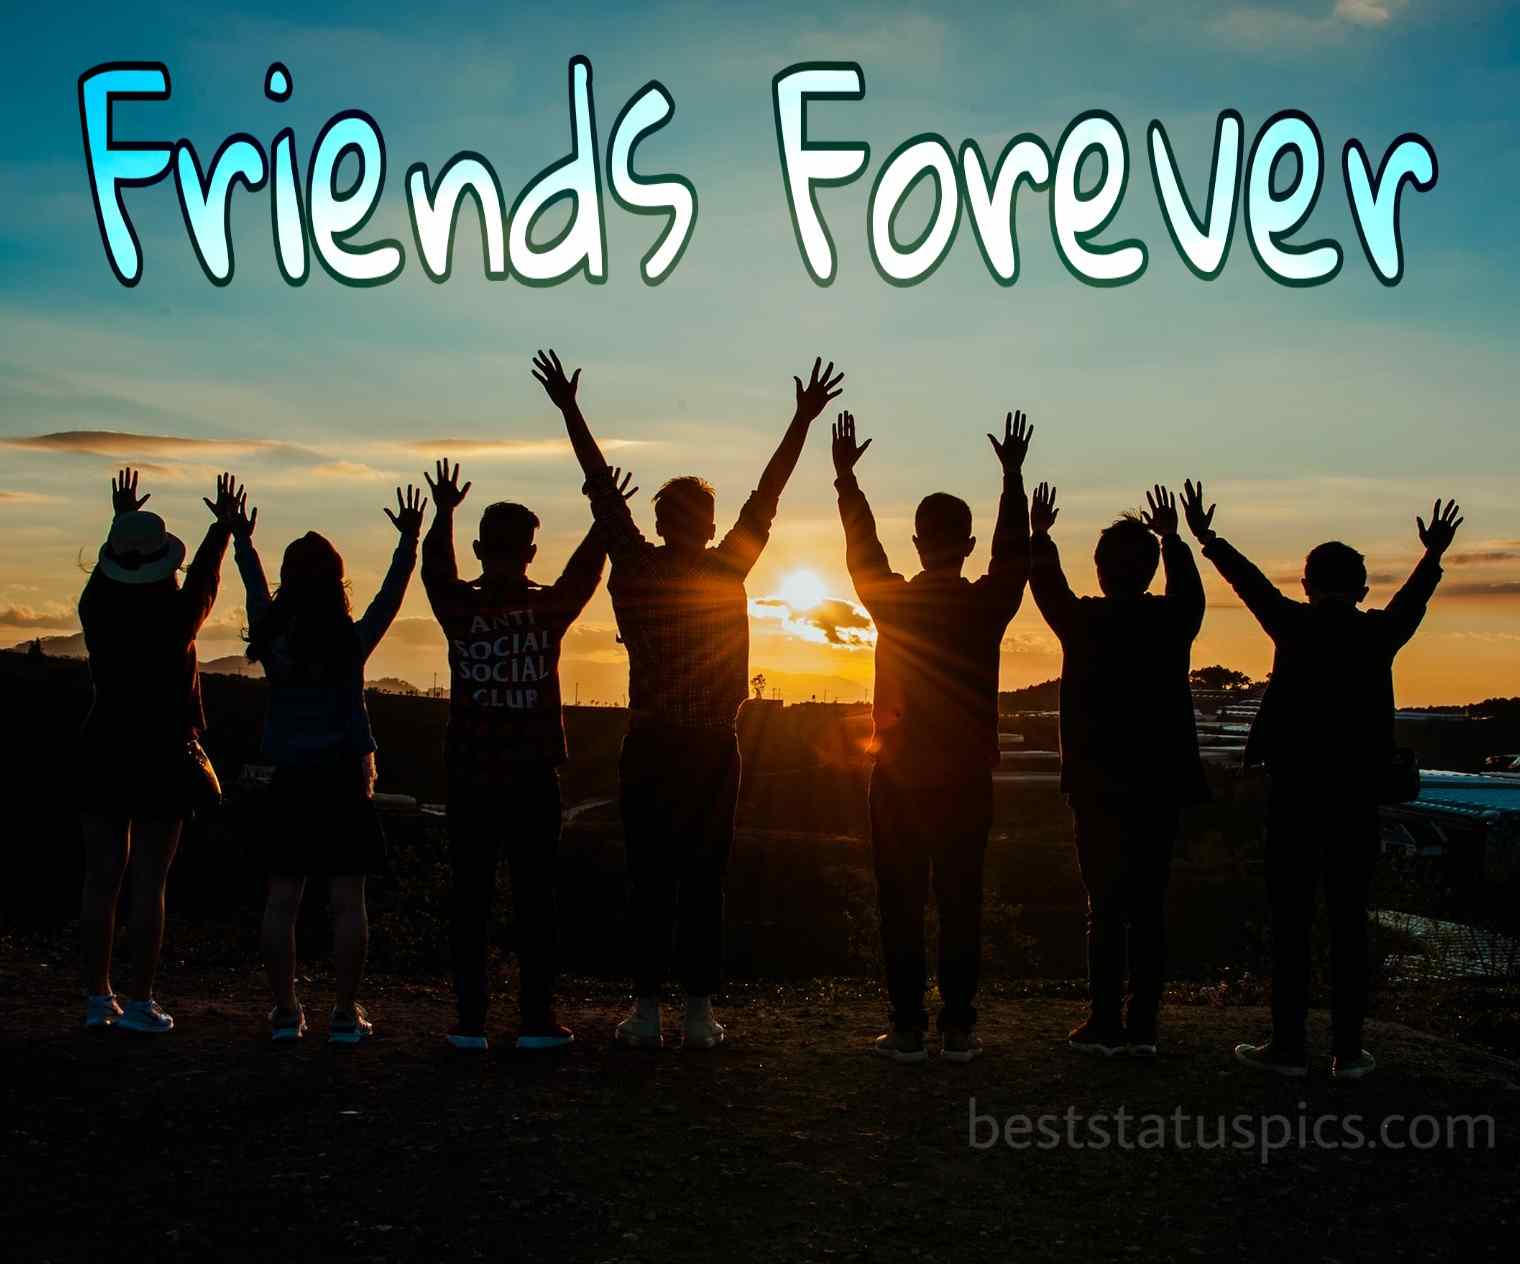 Friends Forever Whatsapp DP, Image, Quotes, Status. Best Status Pics